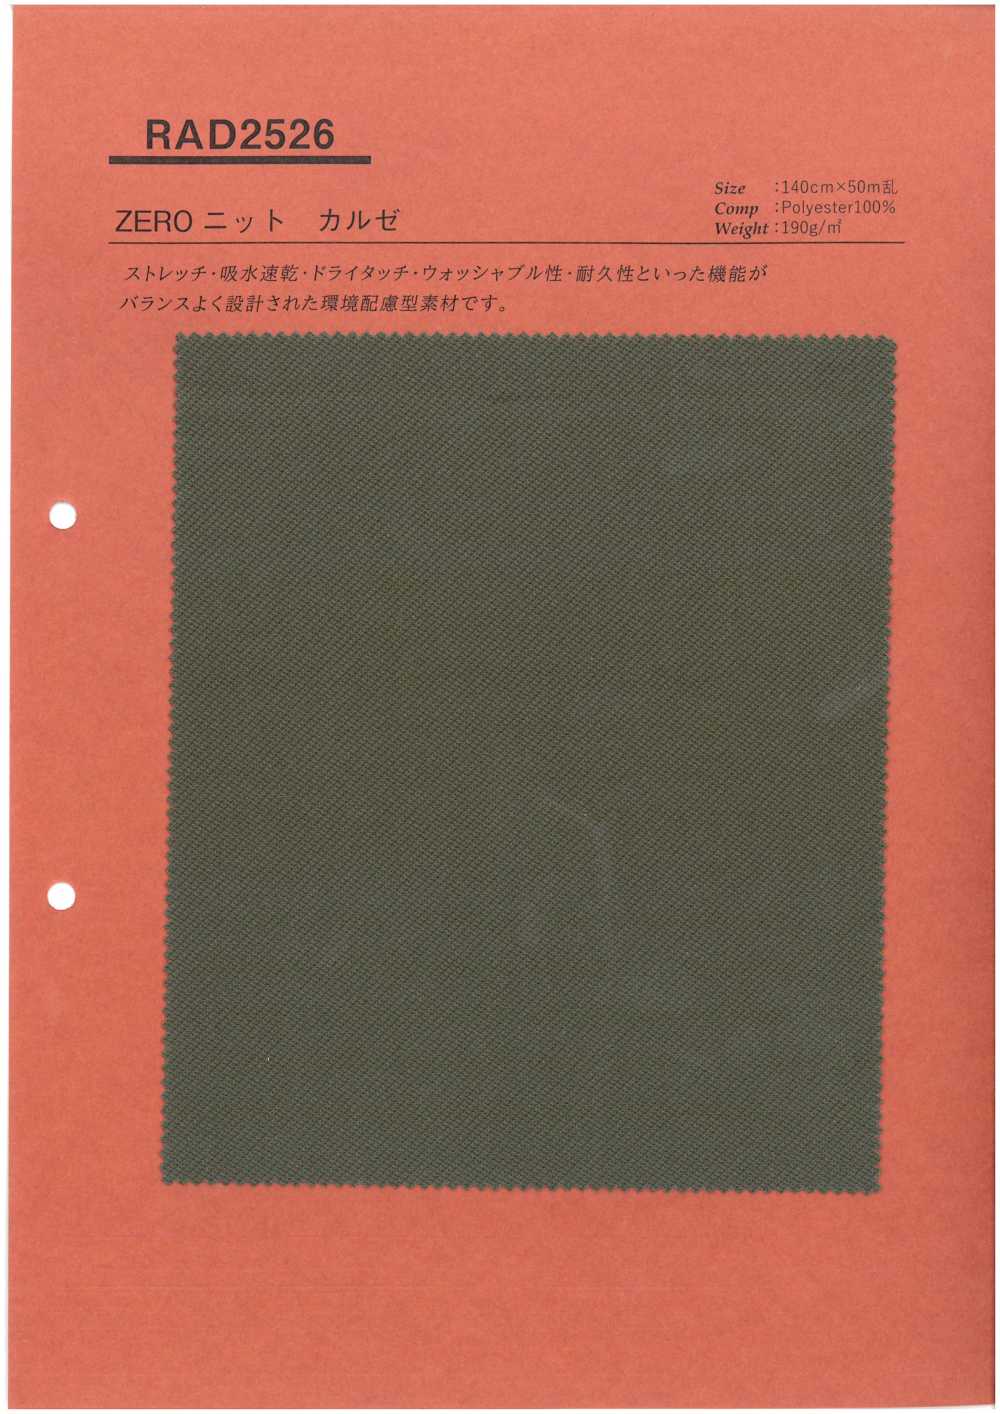 RAD2526 Sustenza® ZERO Kersey[Tessile / Tessuto] Takato